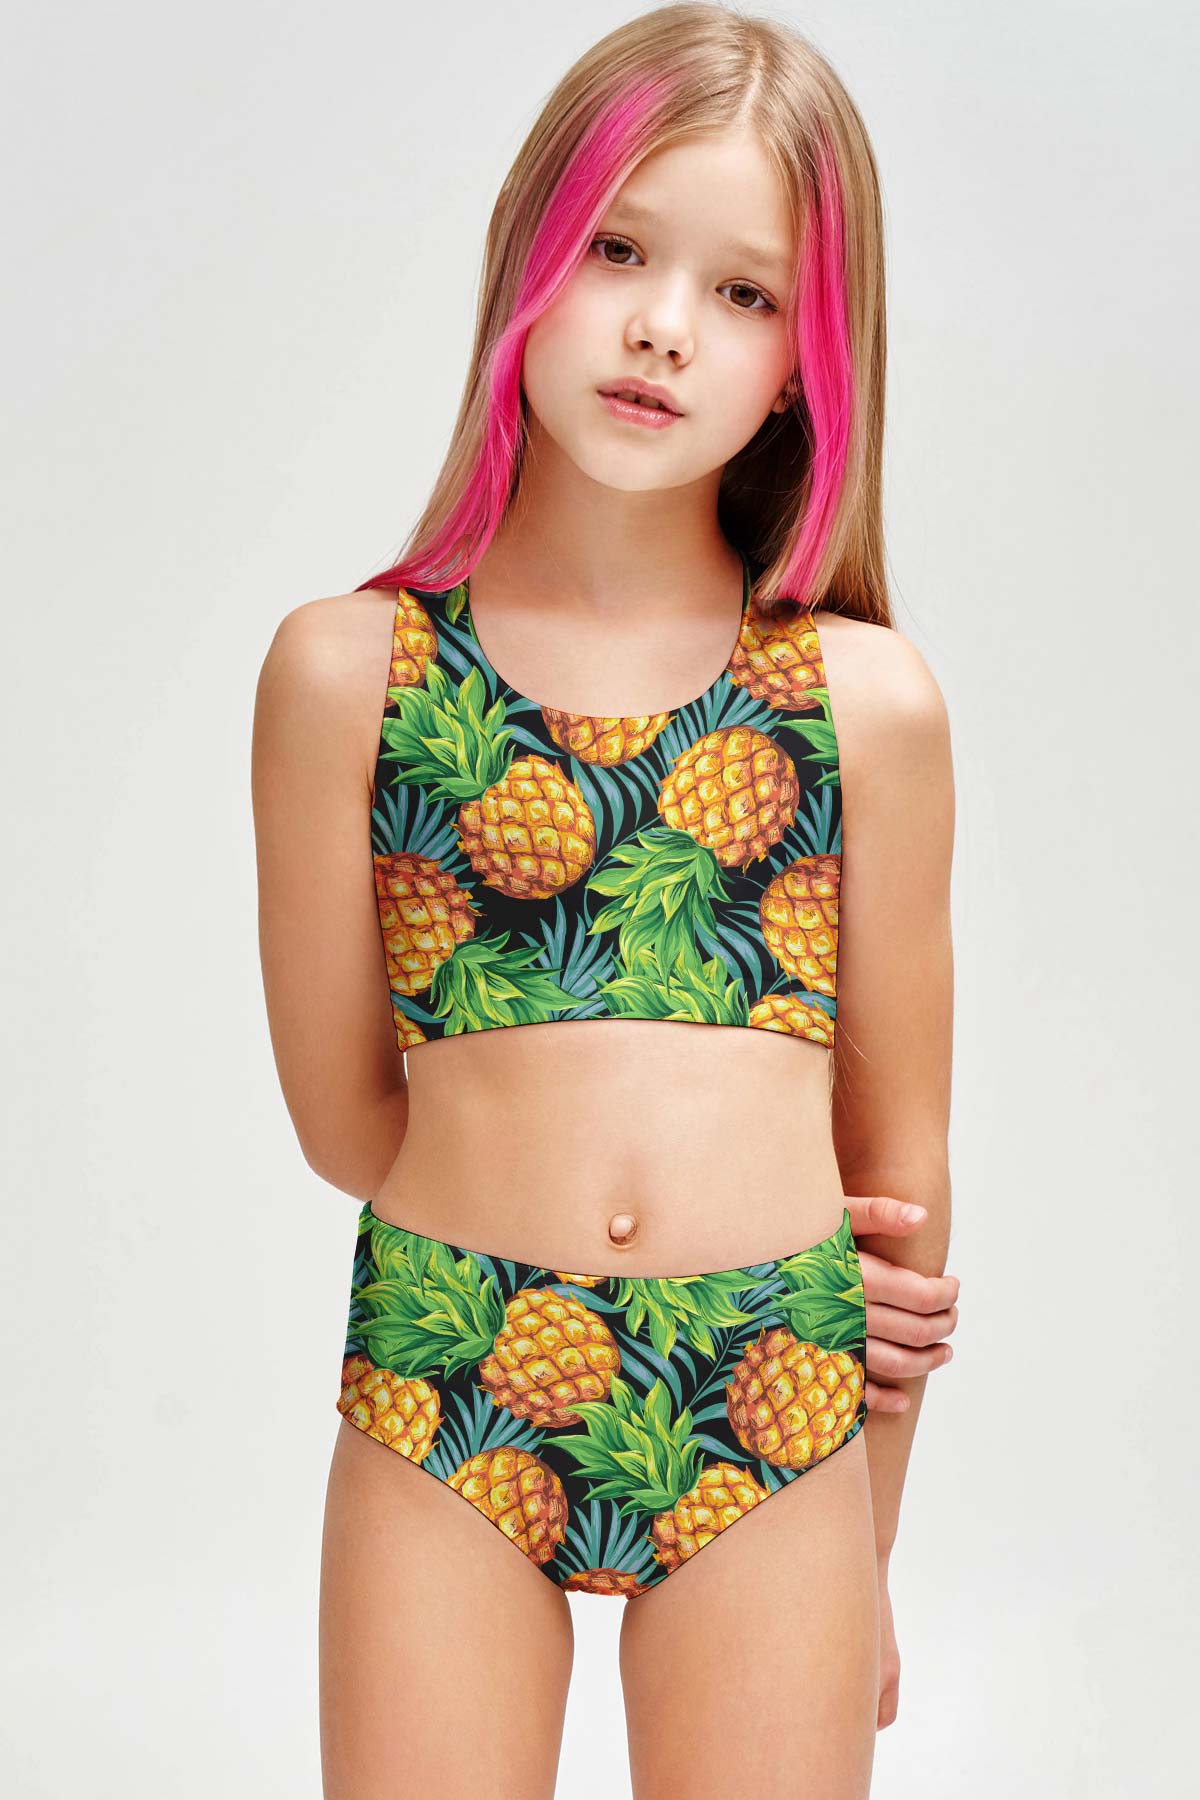 Endless Summer Claire Green Sporty Two Piece Swim Bikini Set - Girls - Pineapple Clothing